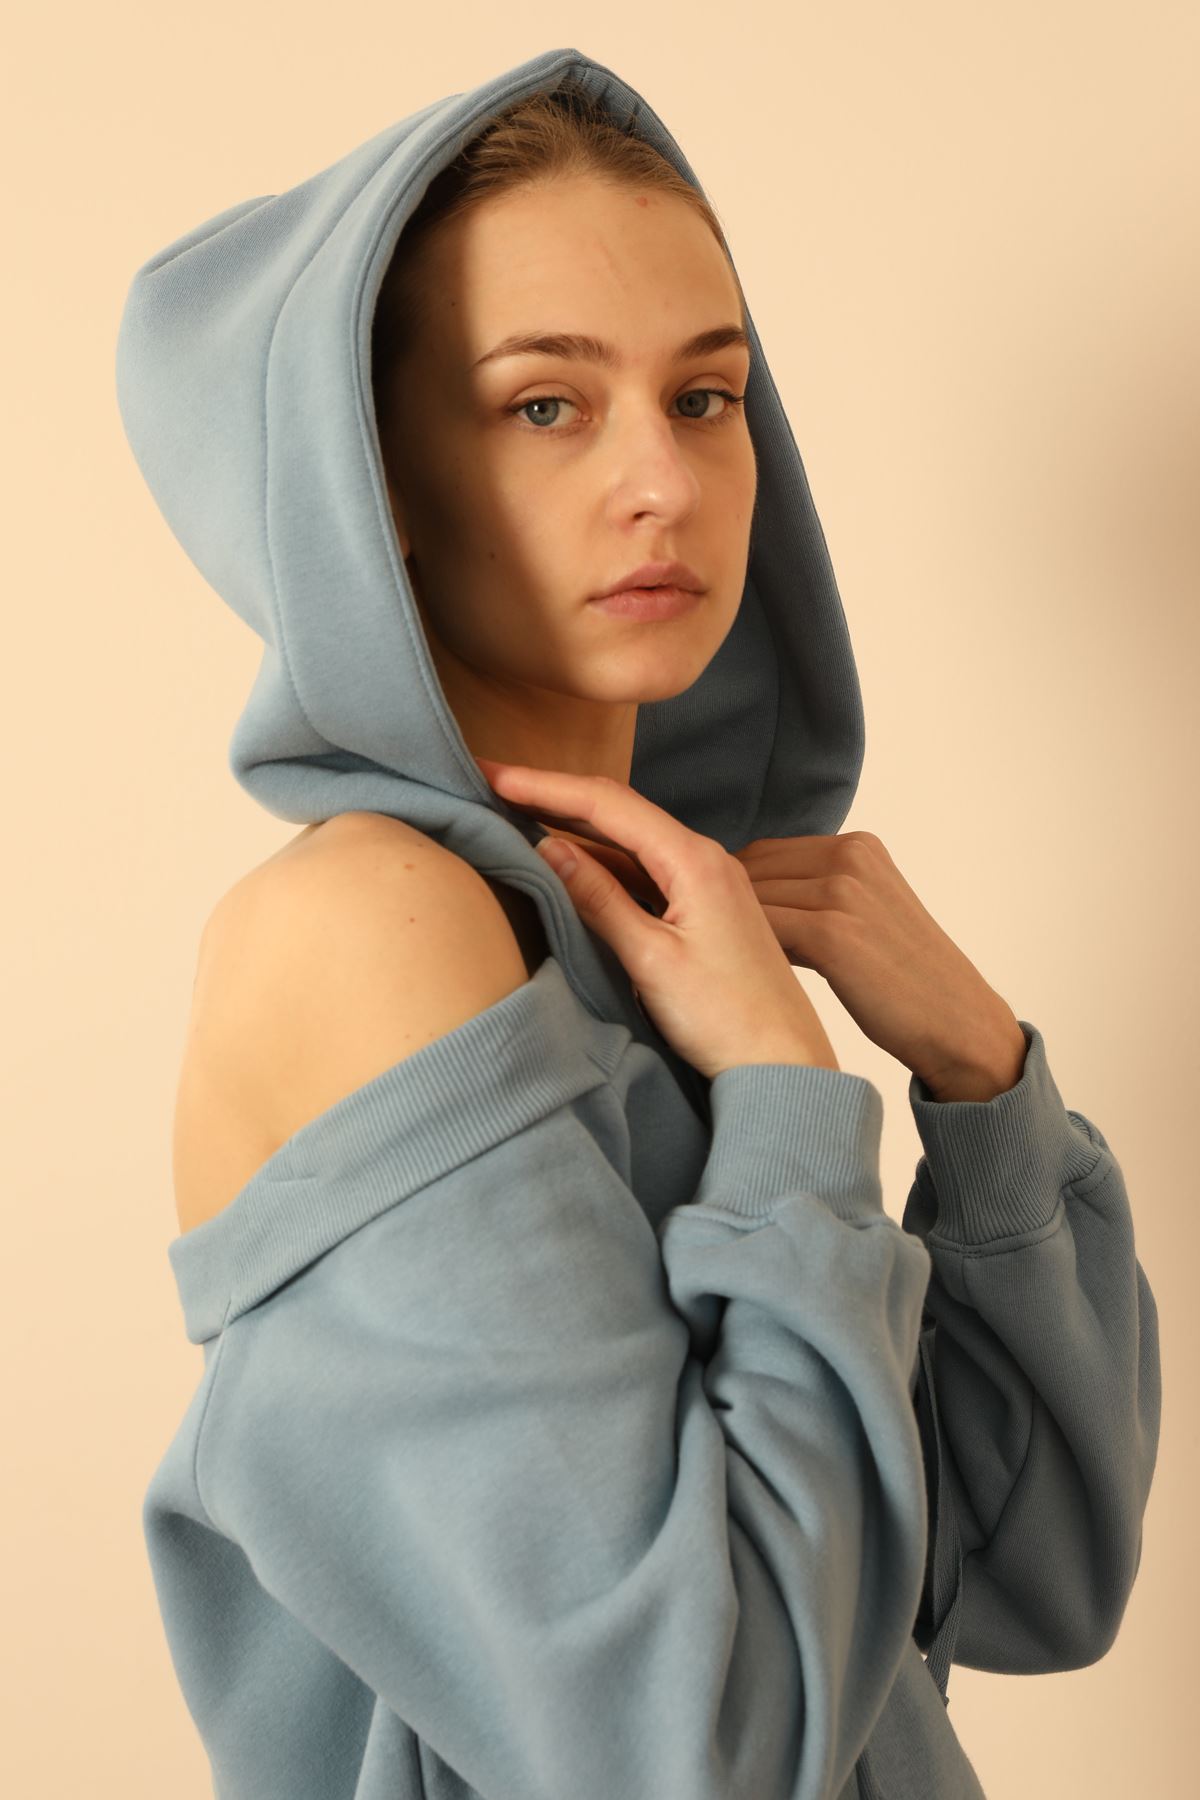 Third Knit With Wool İnside Fabric Hooded Hip Height Shoulder Detailed Women Sweatshirt - Light Blue